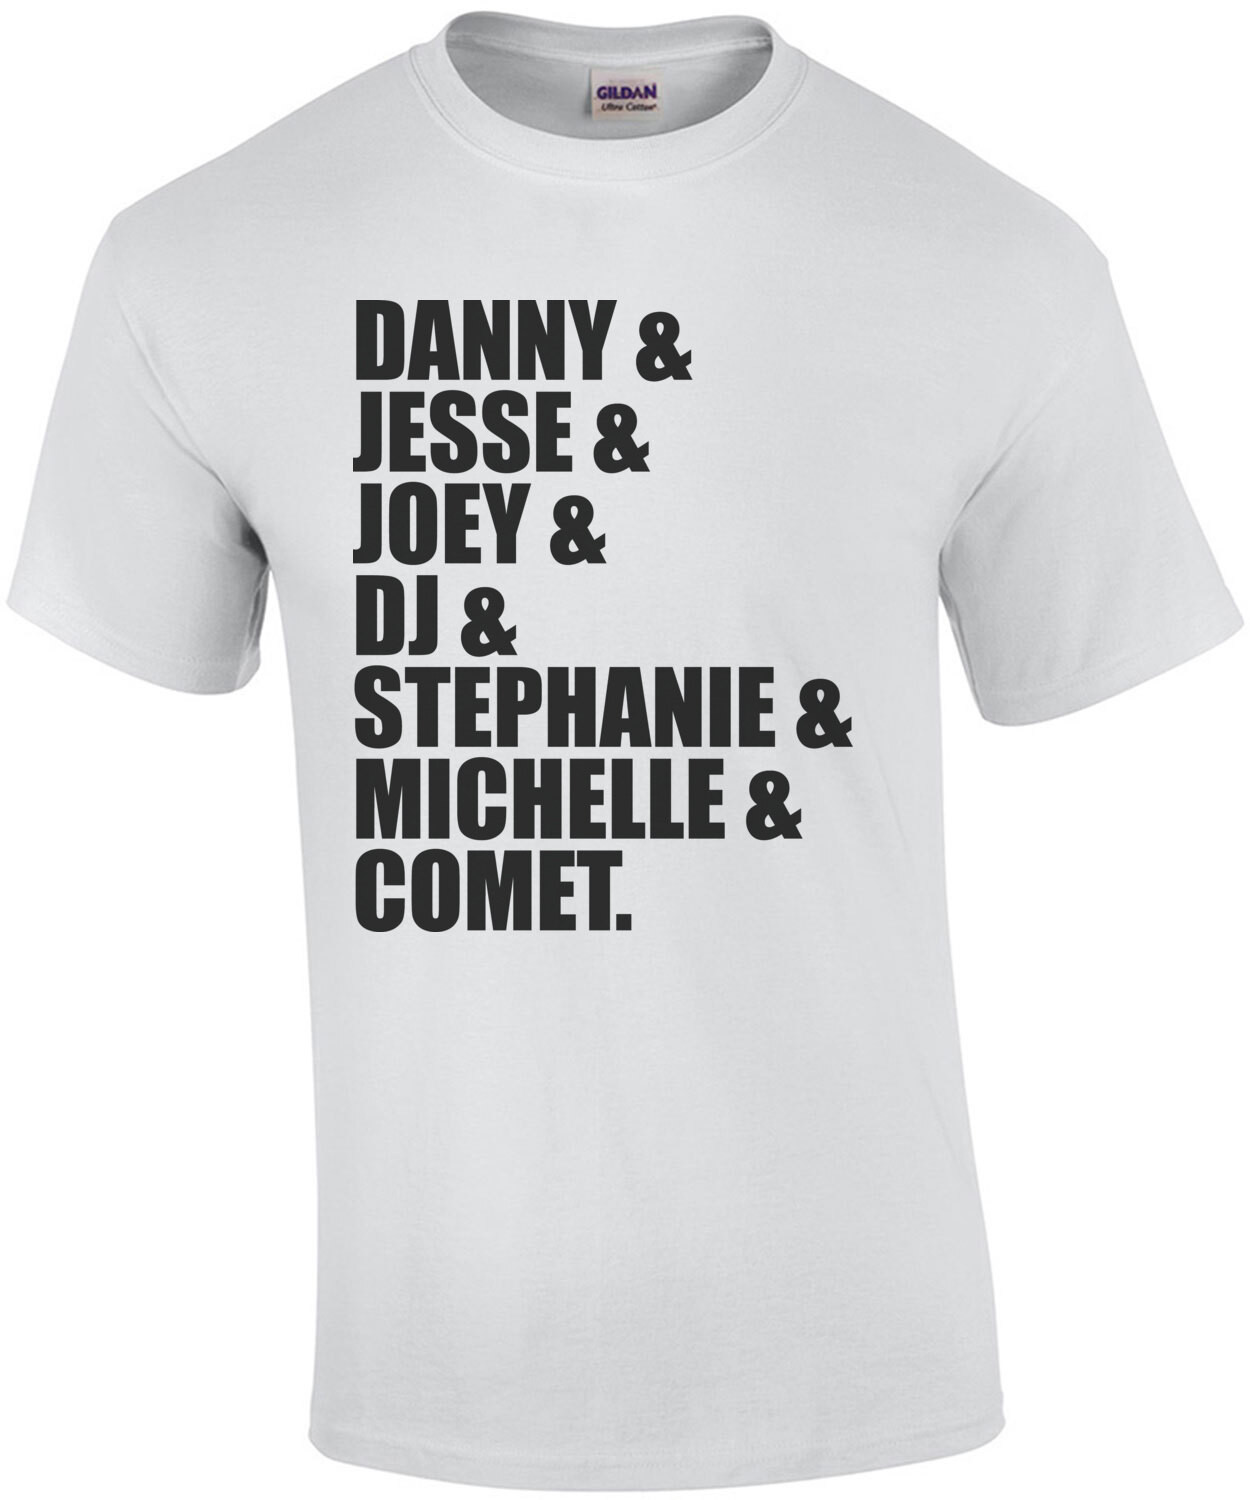 Danny & Jesse & Joey & DJ & Stephanie & Michelle & Comet. Full House - 80's T-Shirt